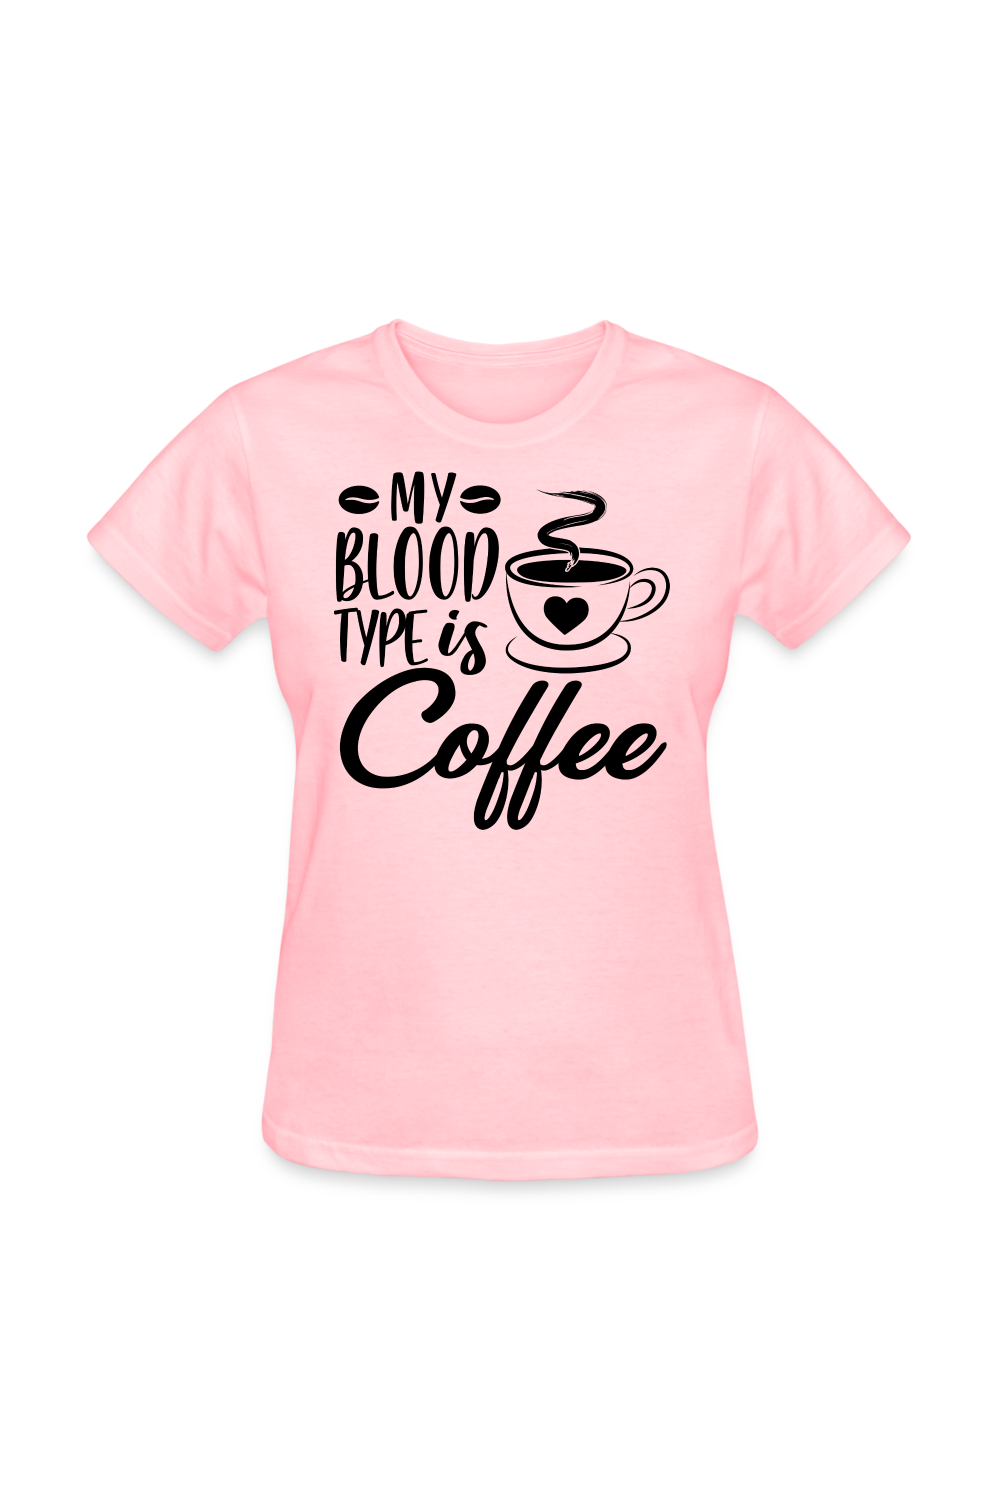 My Blood Type Is Coffee Women's Nurse T-Shirt - pink